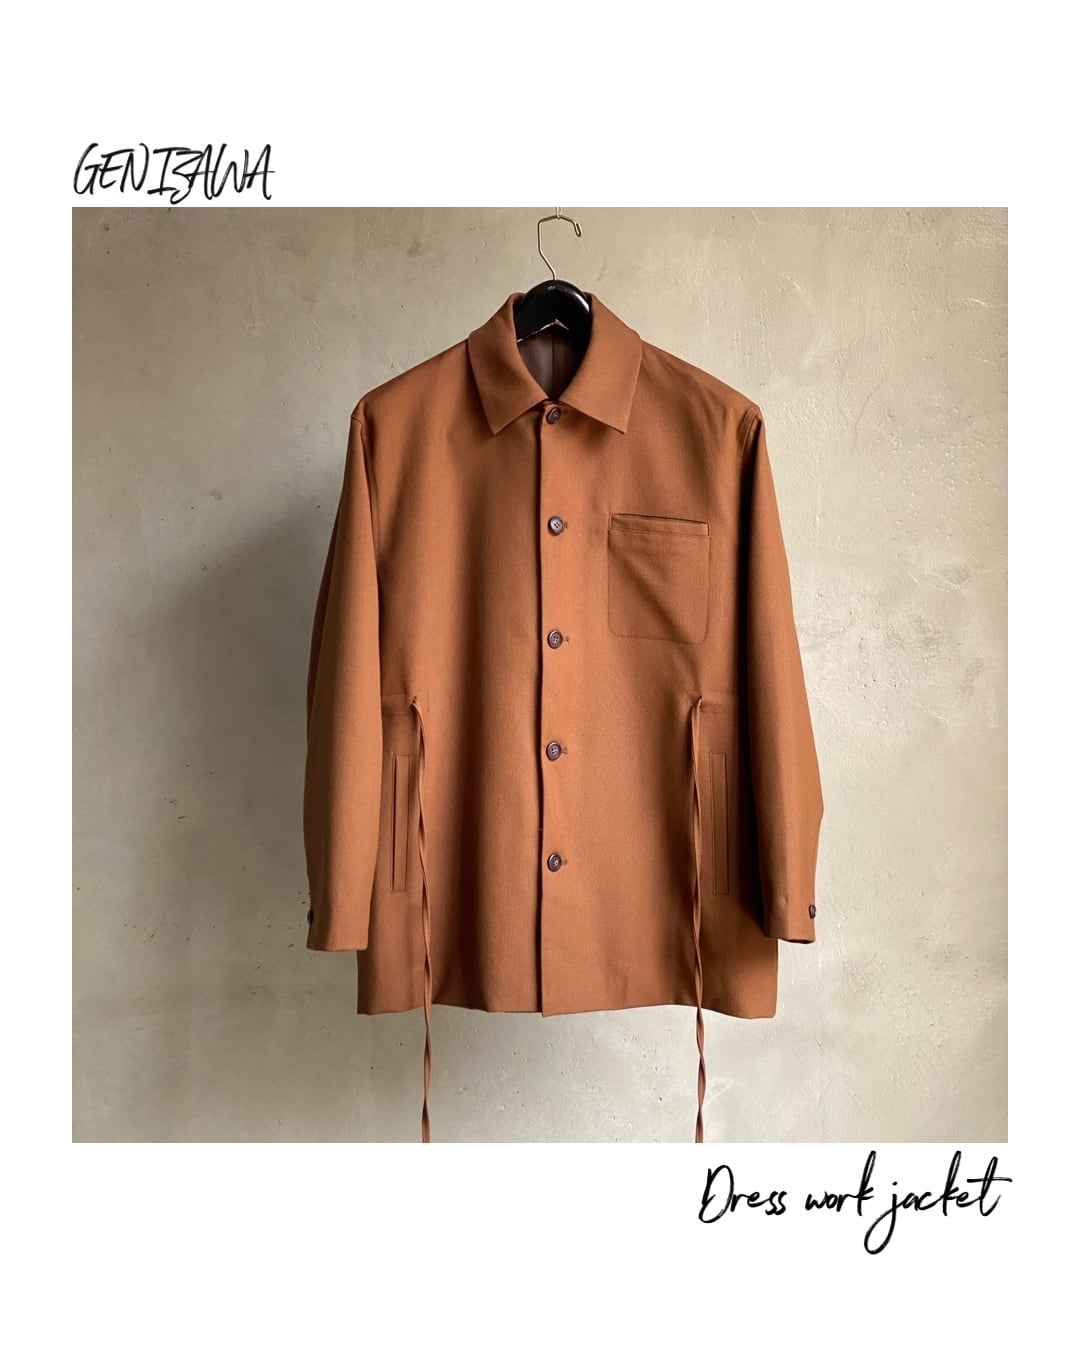 GEN IZAWA / Dress work jacket 